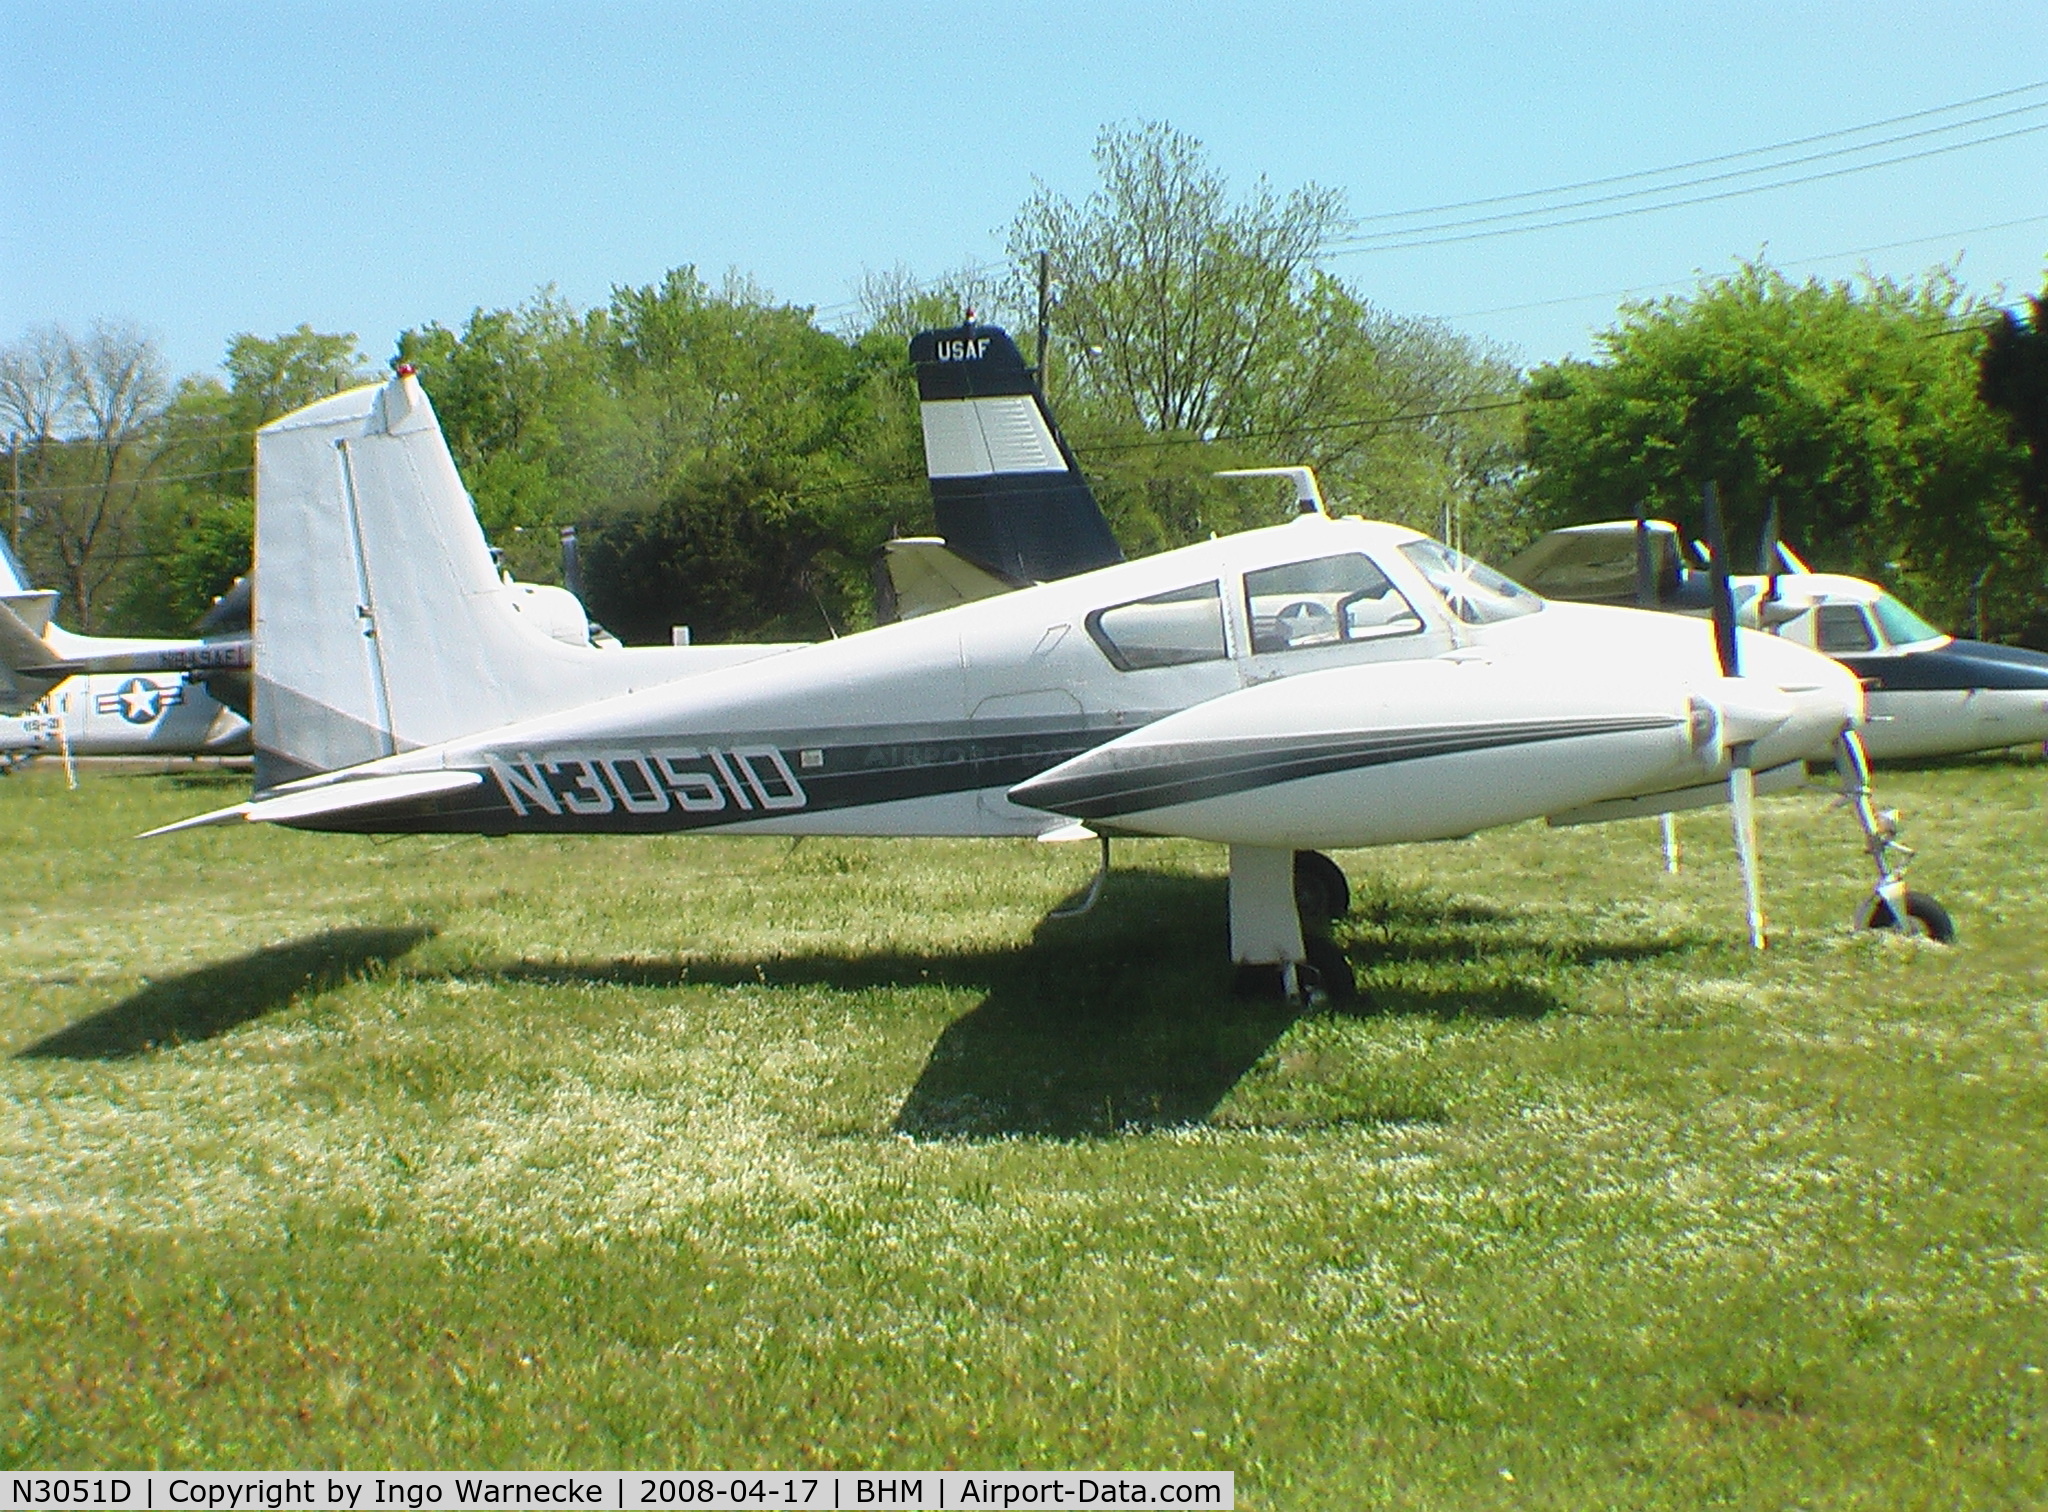 N3051D, 1956 Cessna 310 C/N 35251, Cessna 310 at Southern Mus. of Flight Aircraft Park, Birmingham AL Airport